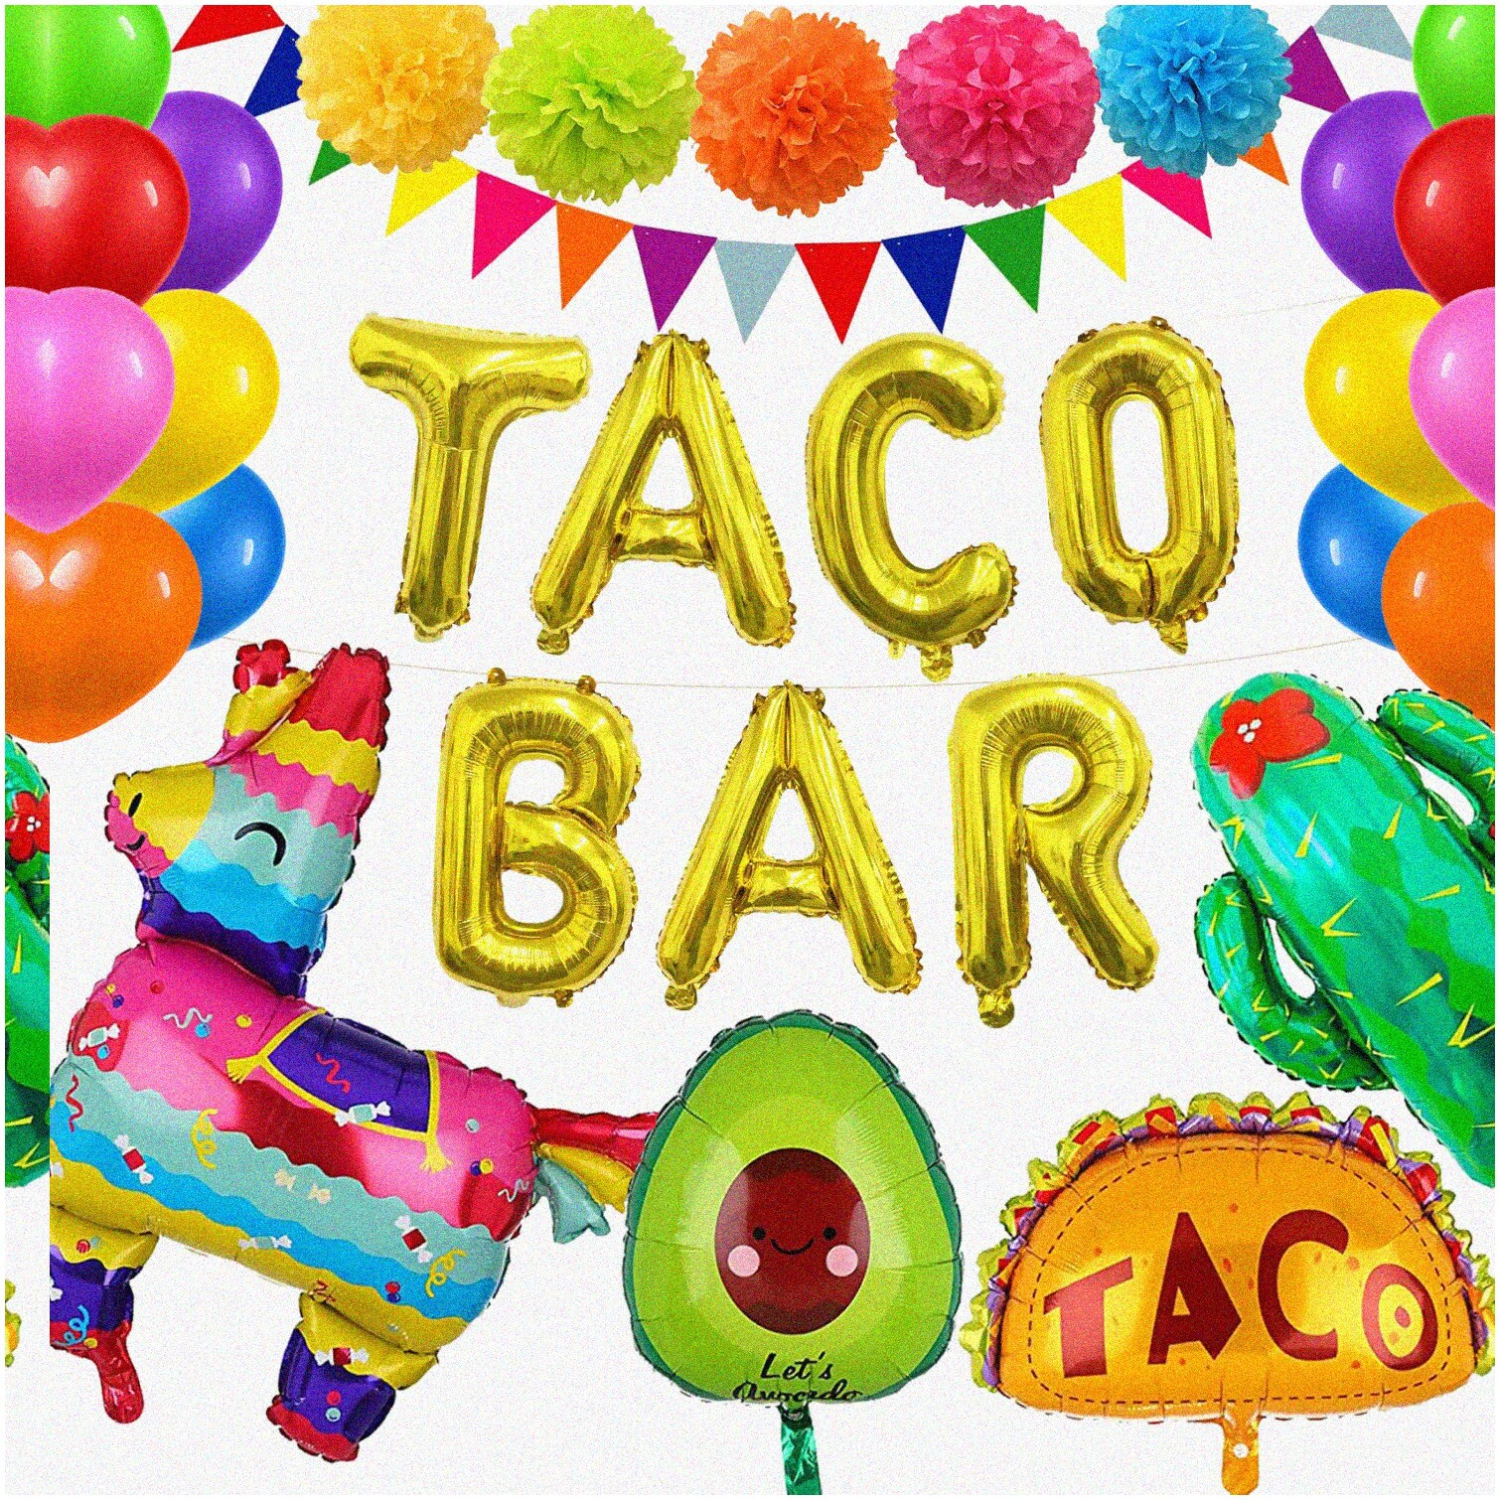 Fiesta Fun Pack: Taco Party & Cinco De Mayo Decorations - Mexican Fiesta Supplies for a Festive Taco Birthday Bash!